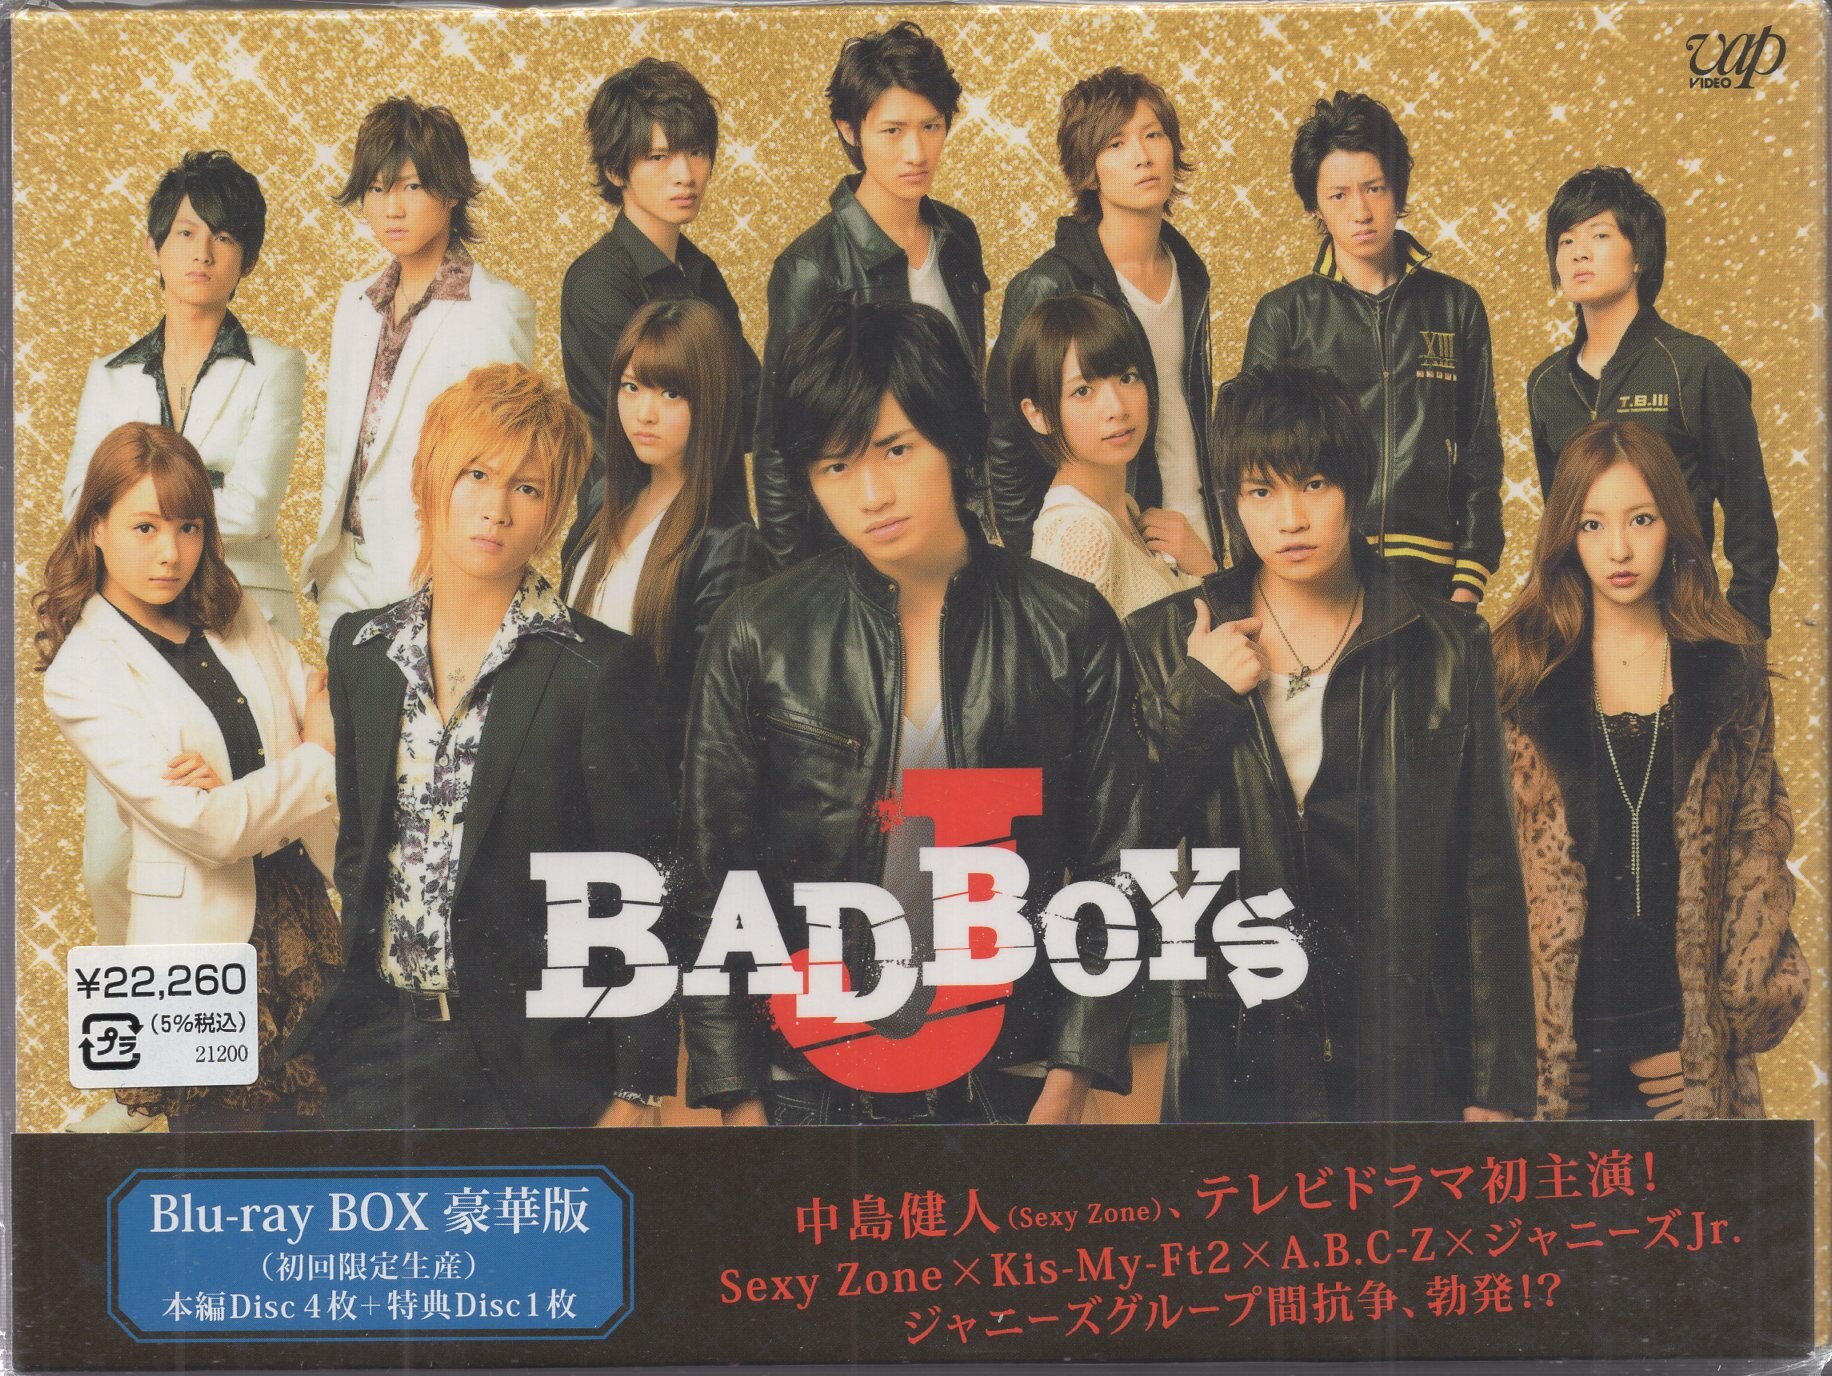 Drama Blu-ray BAD BOYS J Blu-ray BOX Deluxe Edition | MANDARAKE